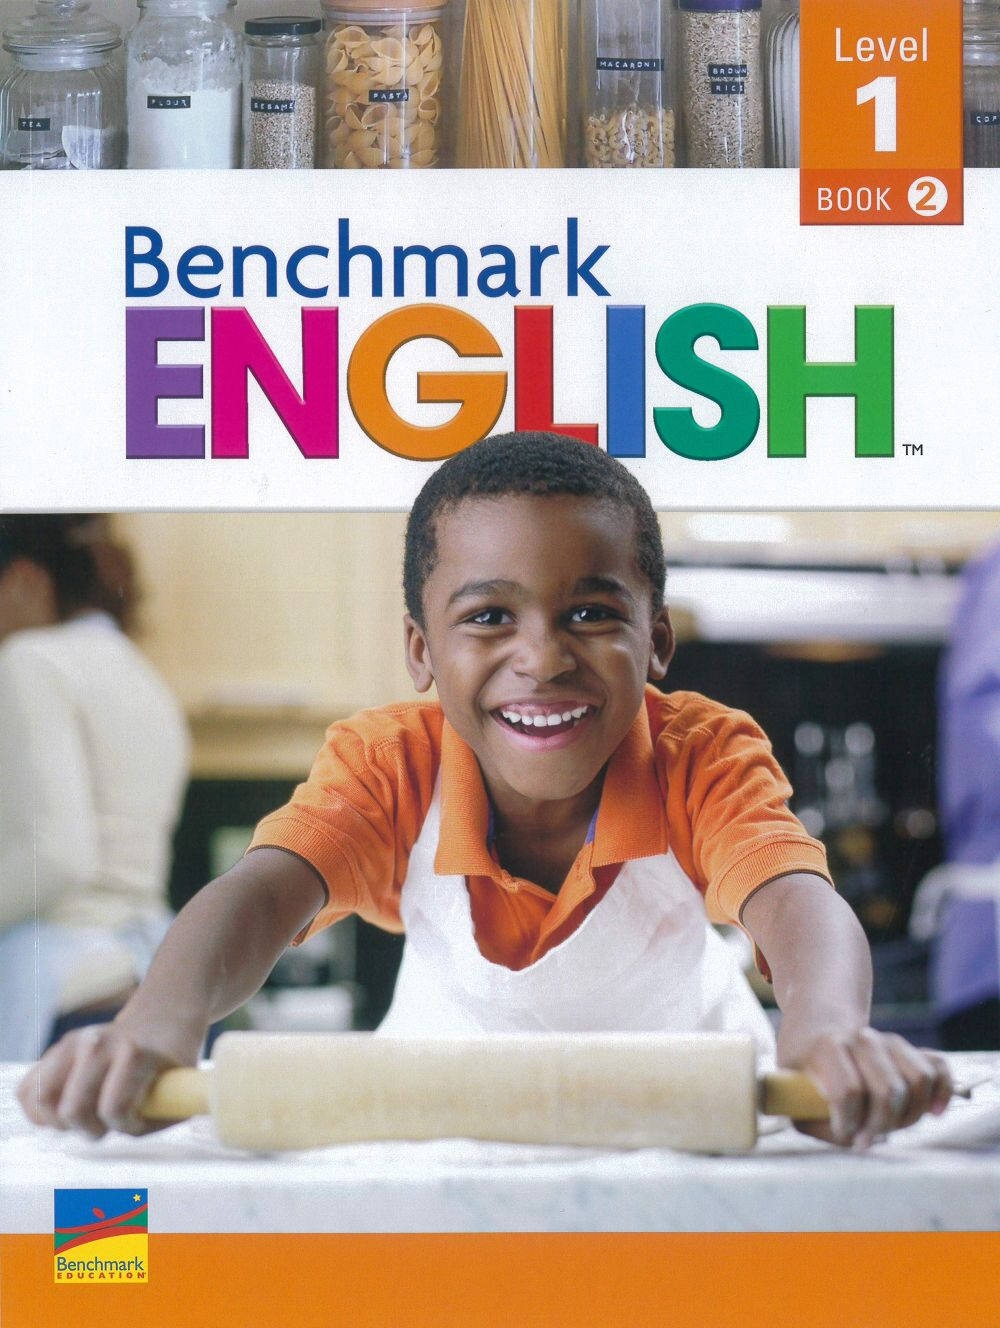 Benchmark English (1) Module 2 Student Book